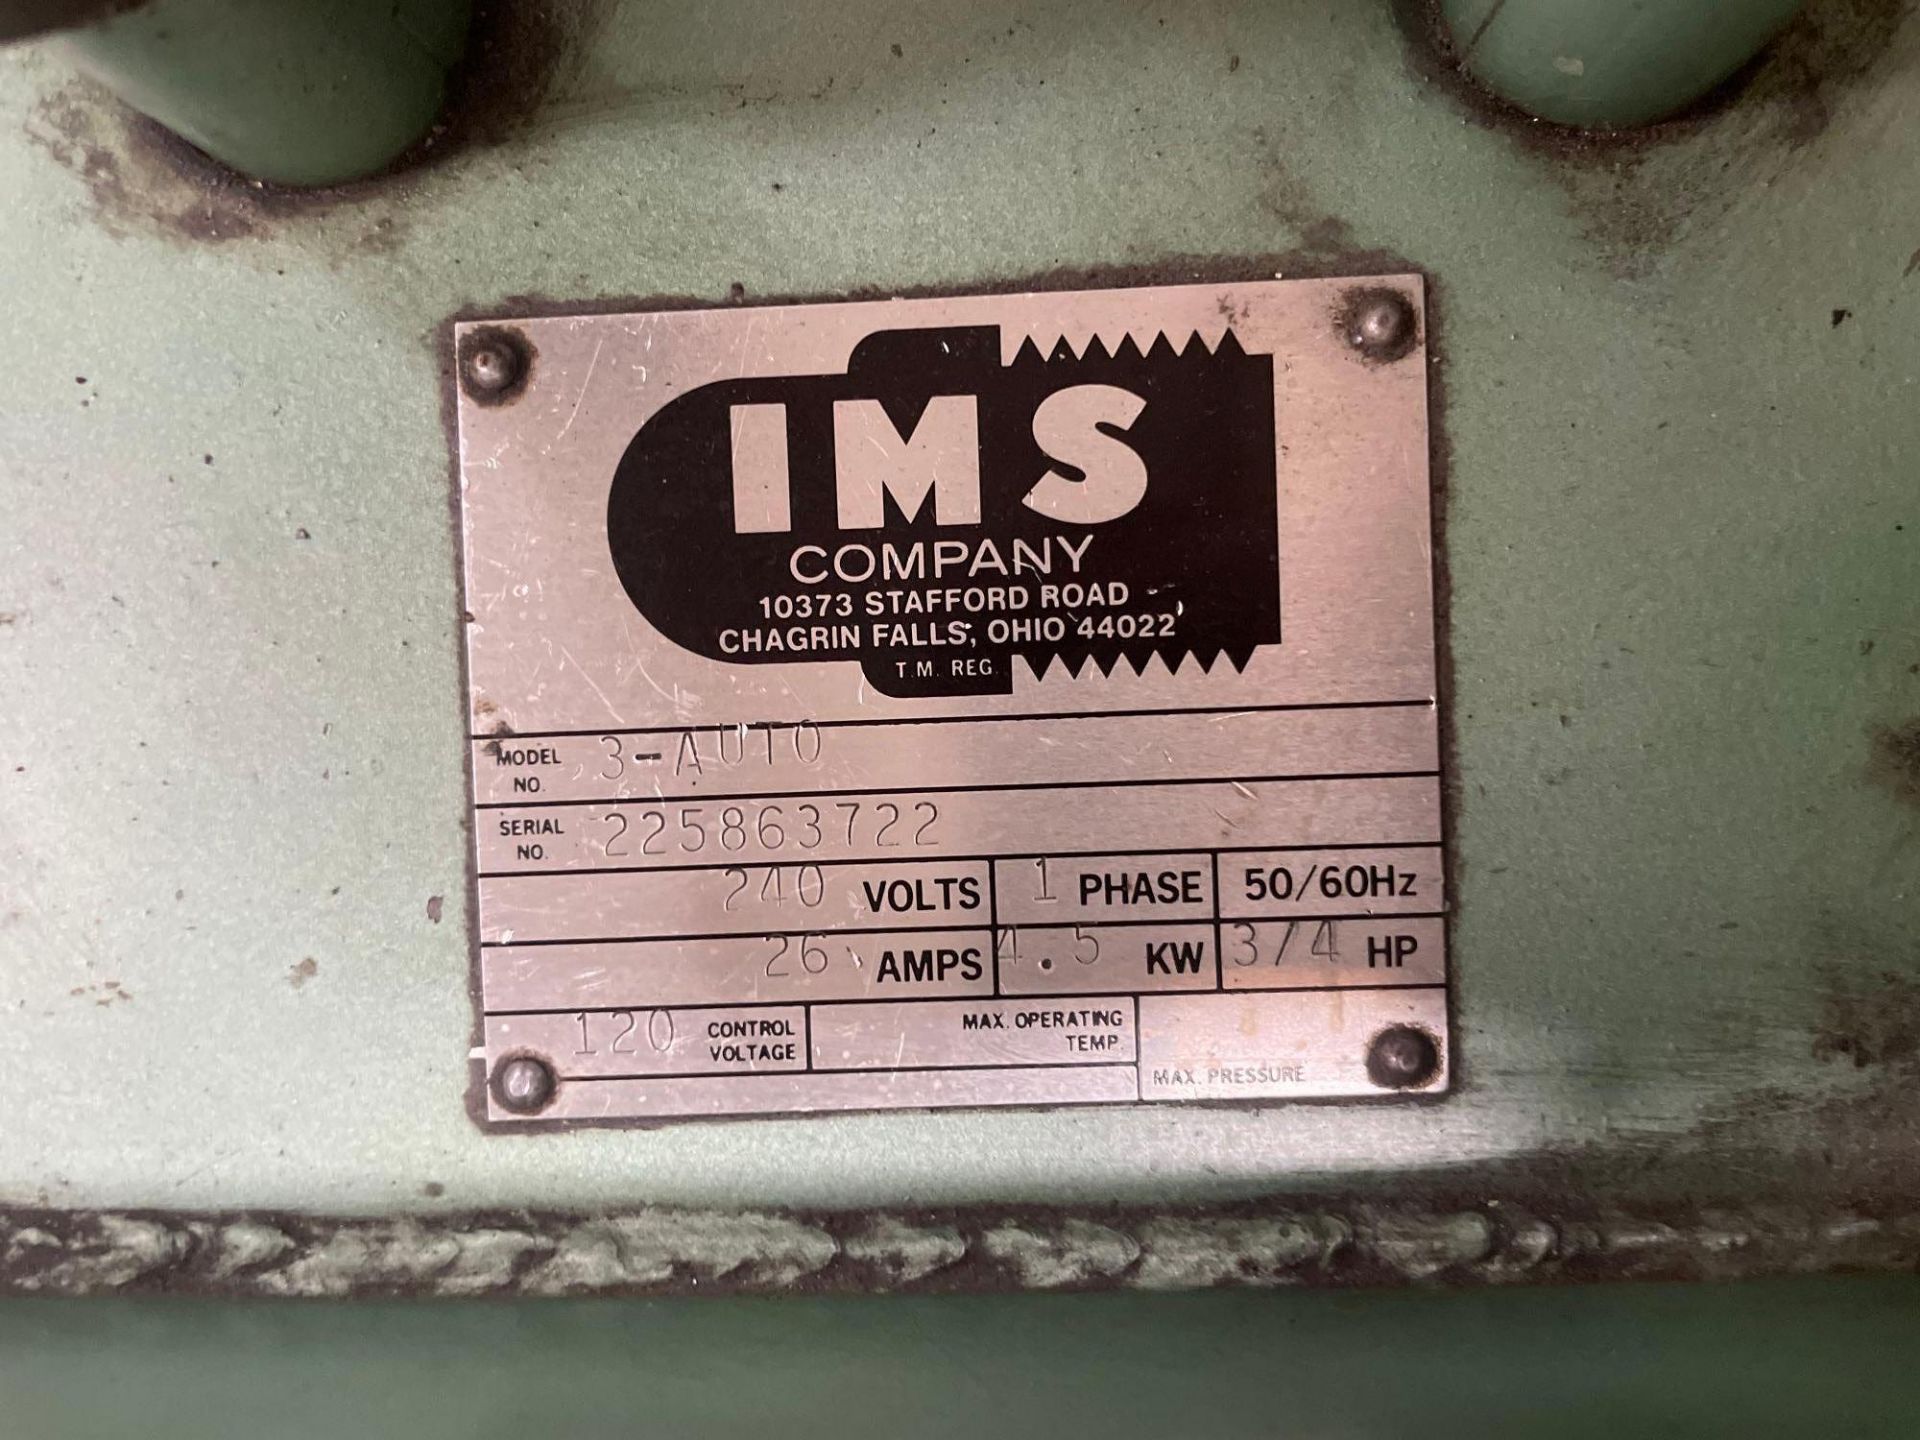 IMS 3-AUTO Temperature Controller, s/n 225863722 - Image 5 of 5